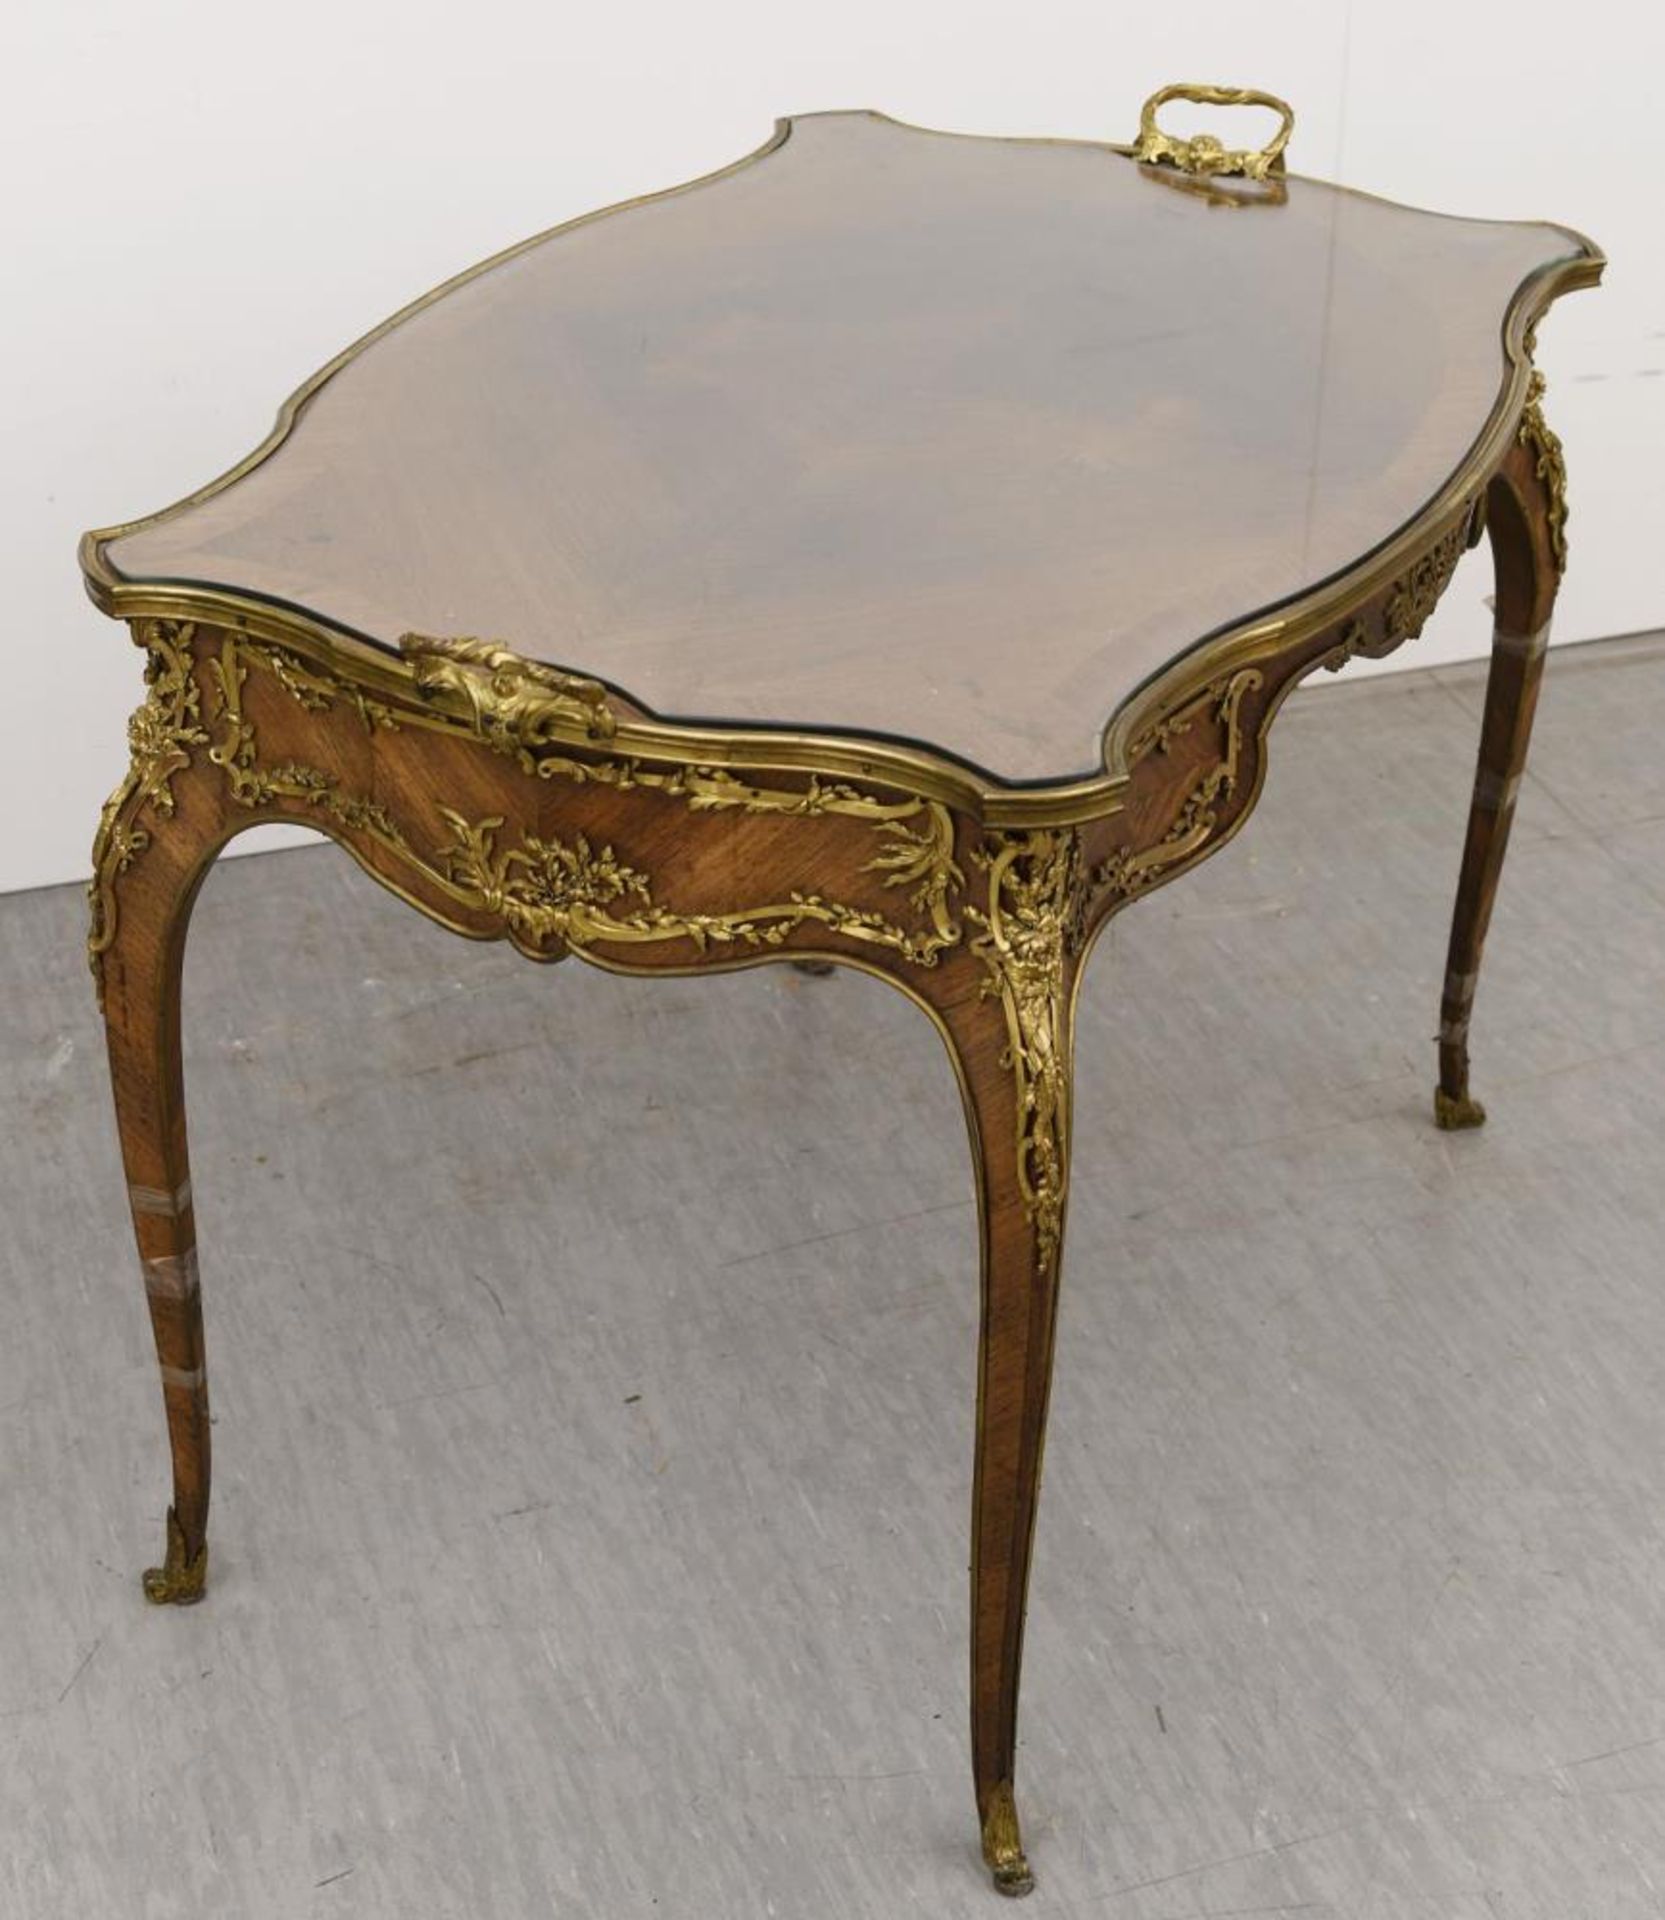 Niedriger Tisch. Barockstil | Mahagoni, Bronzeapplikationen, Glas. - Image 2 of 2